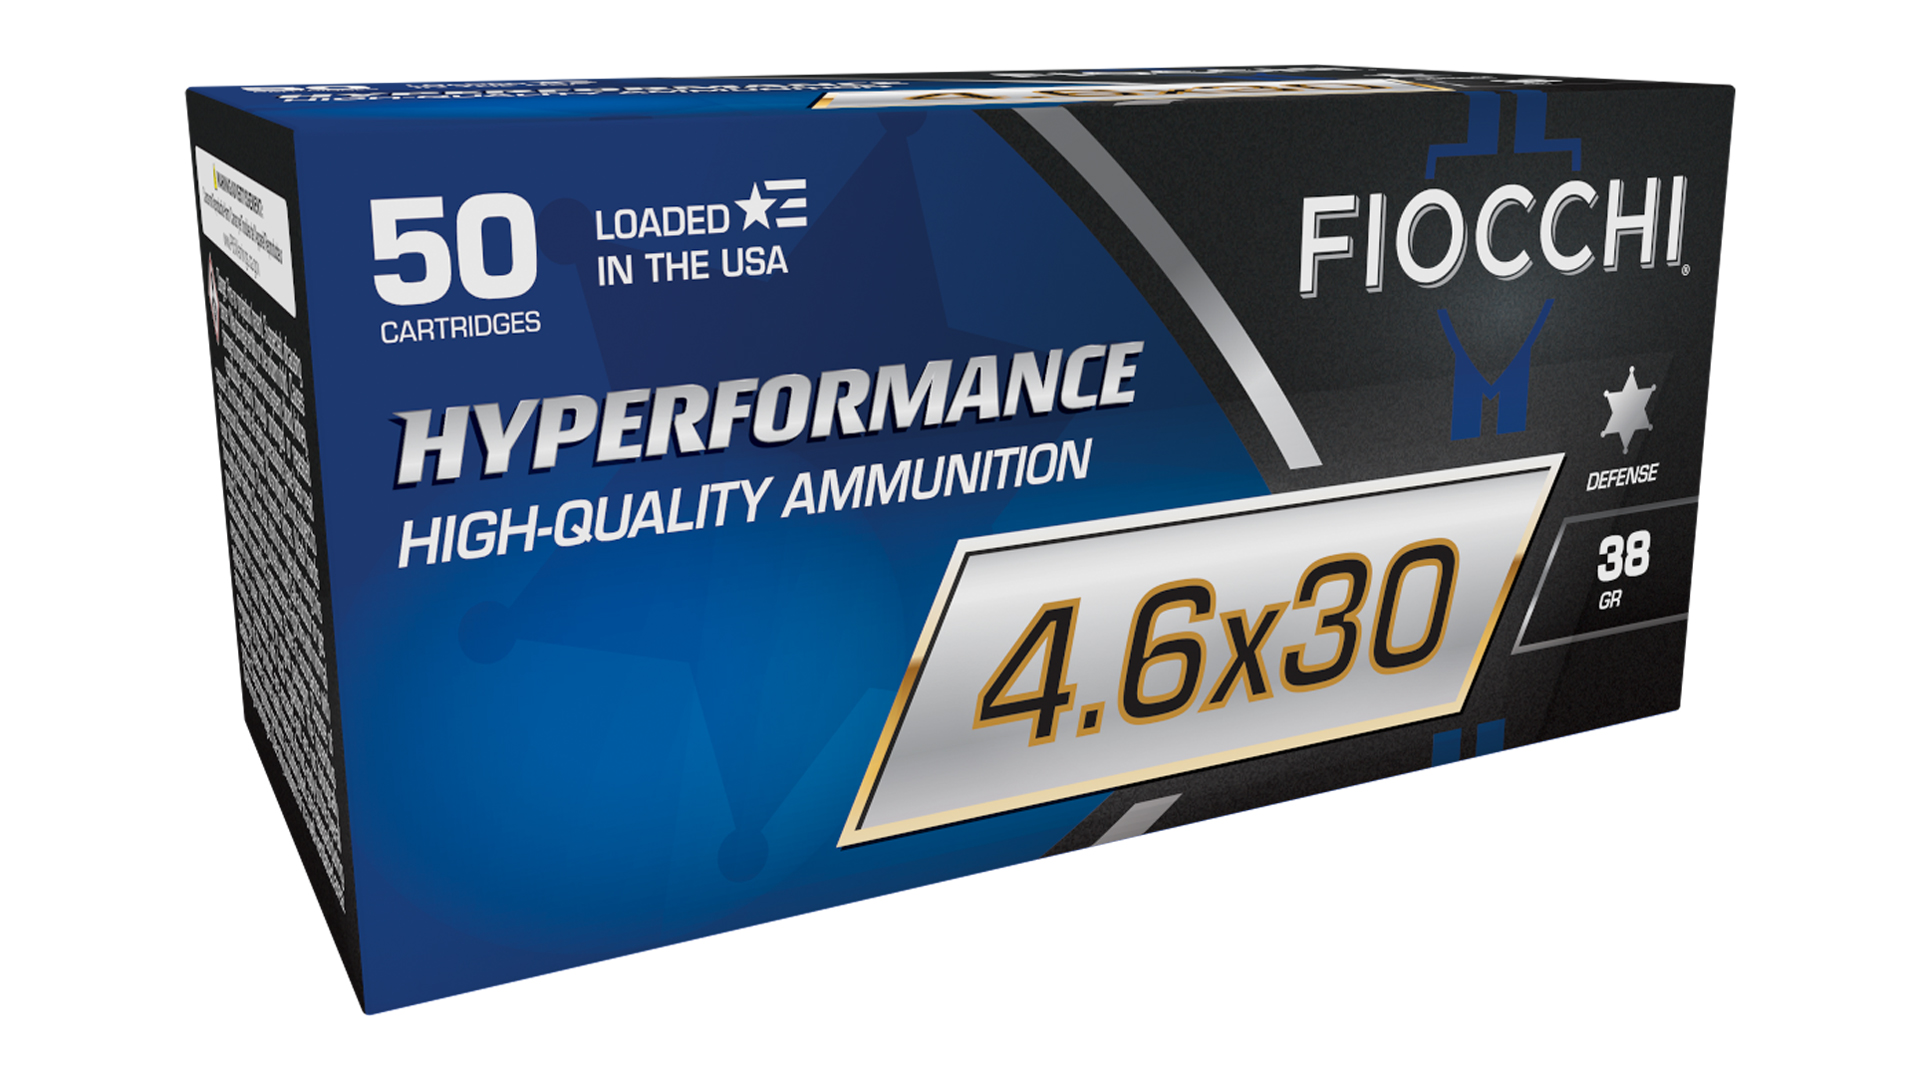 fiocchi 4.6x30 mm hyperformance ammunition packaging SHOT Show 2024 new product announcement